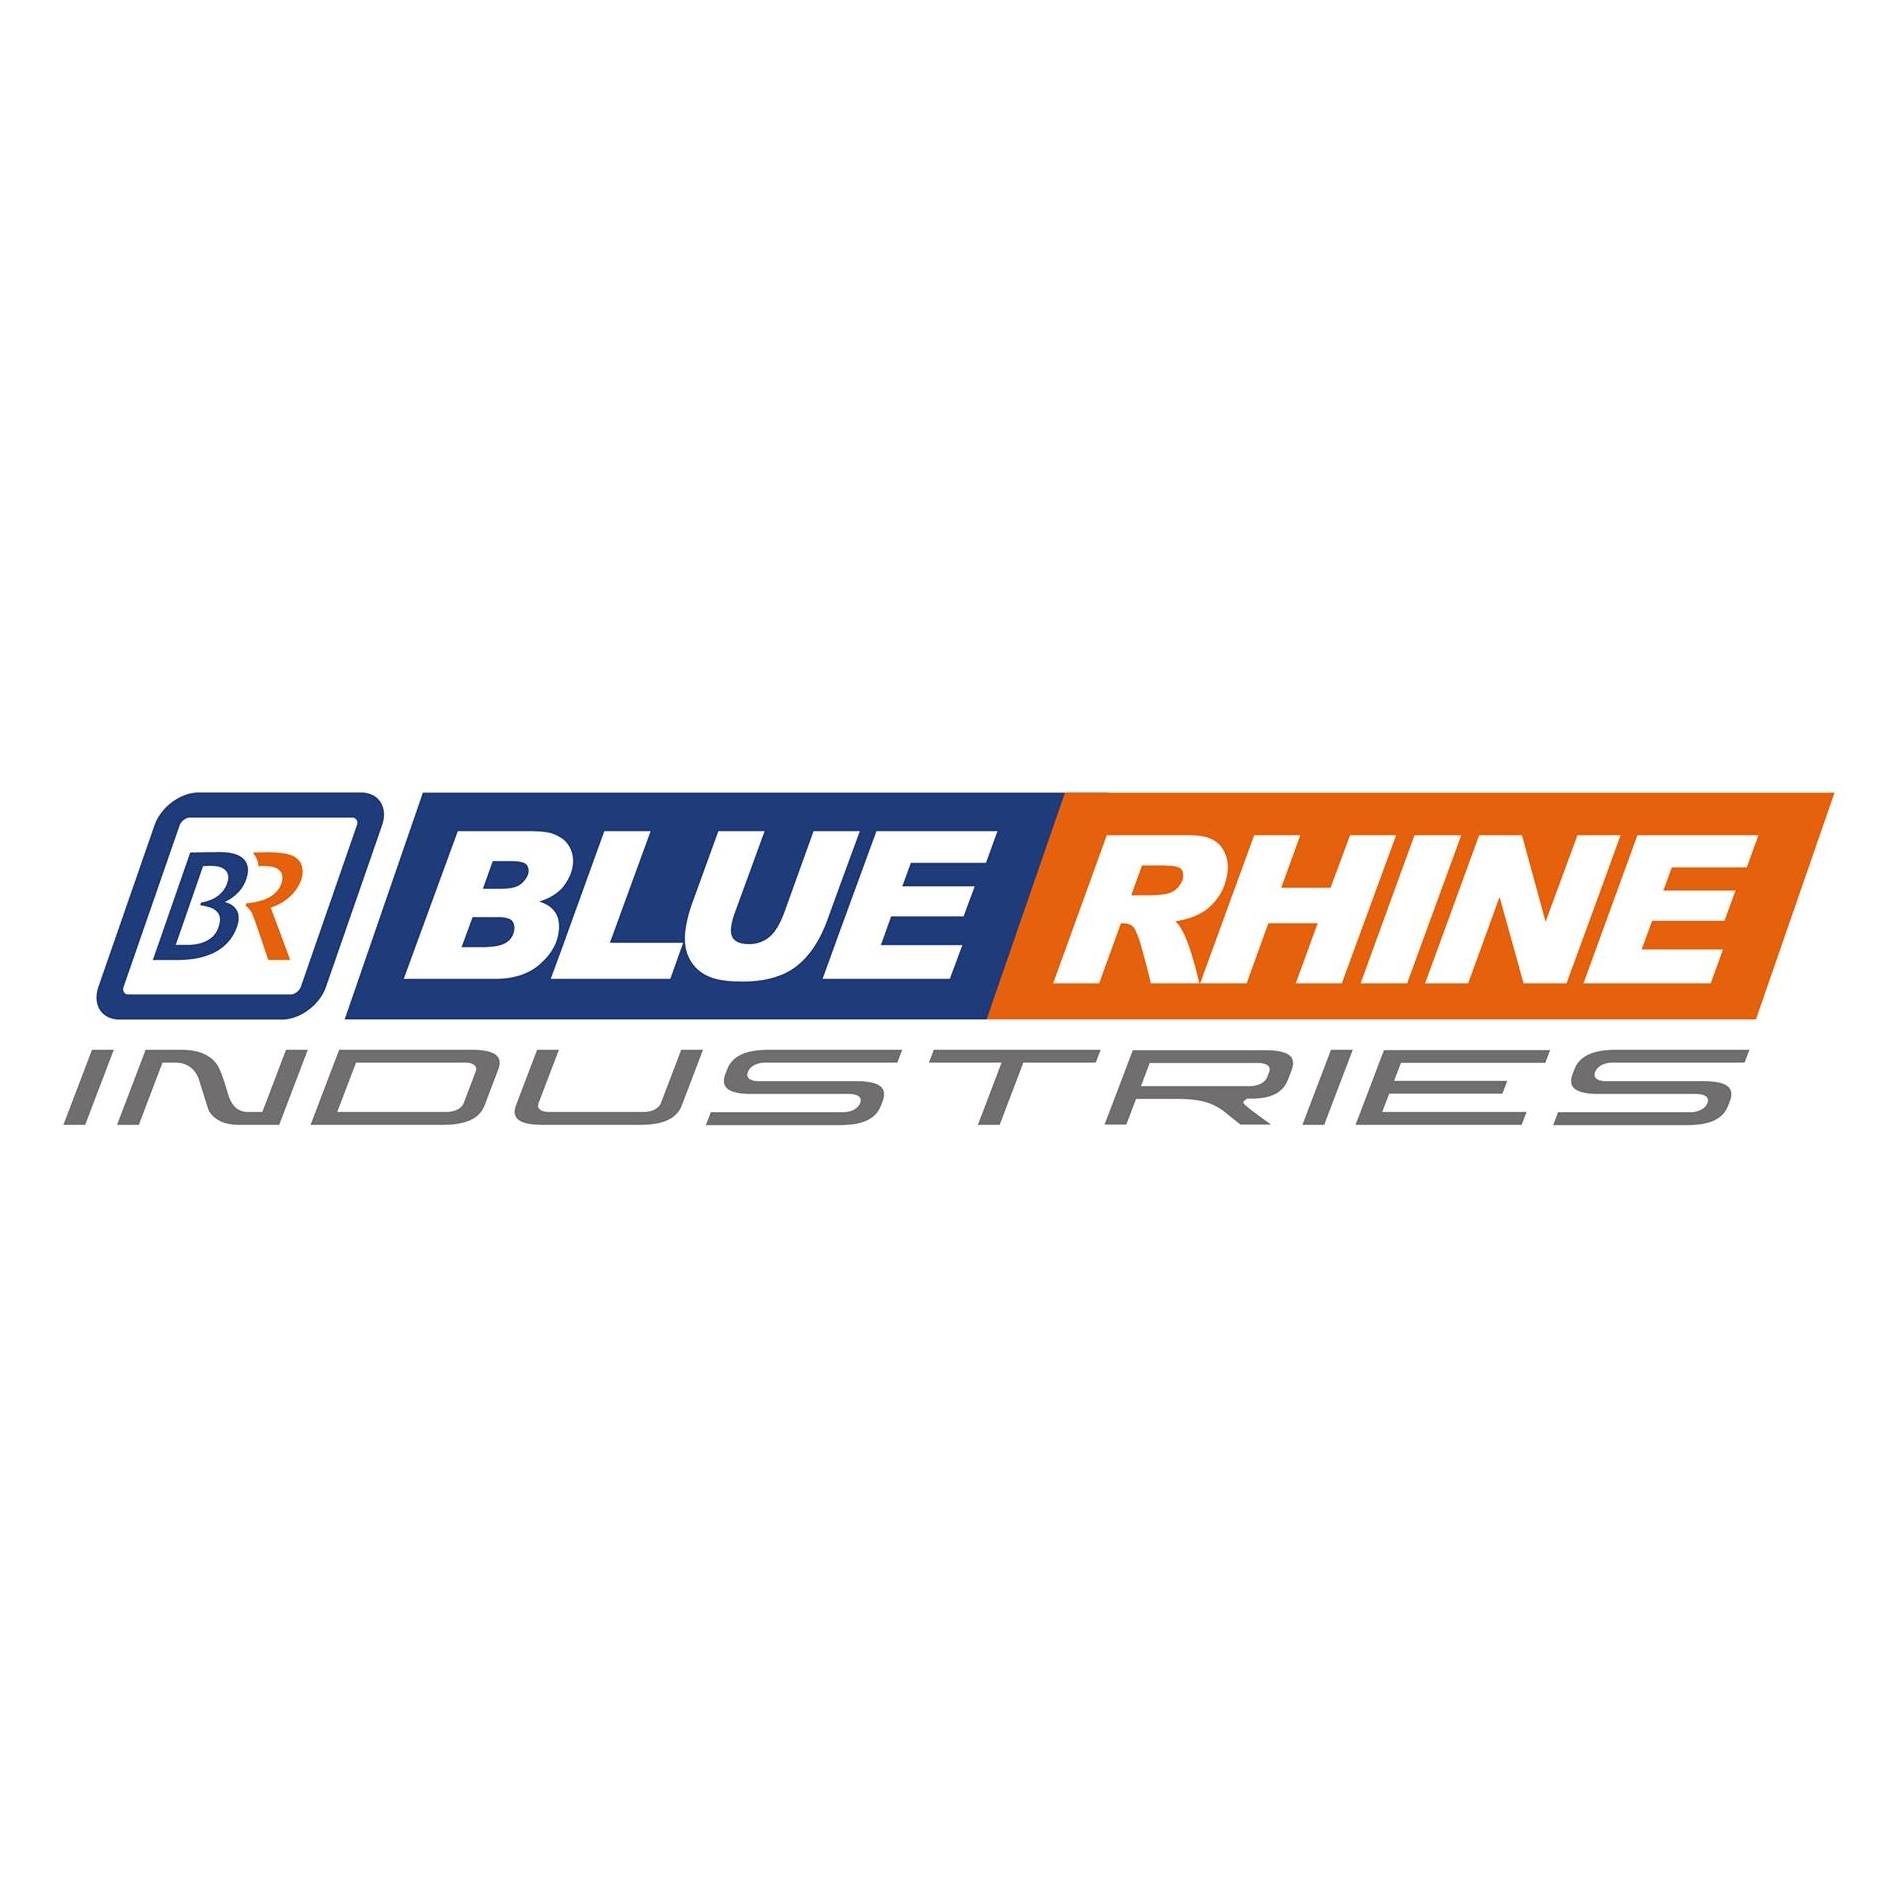 Blue Rhine Industries Metal Manufacturing Companies In Dubai Get